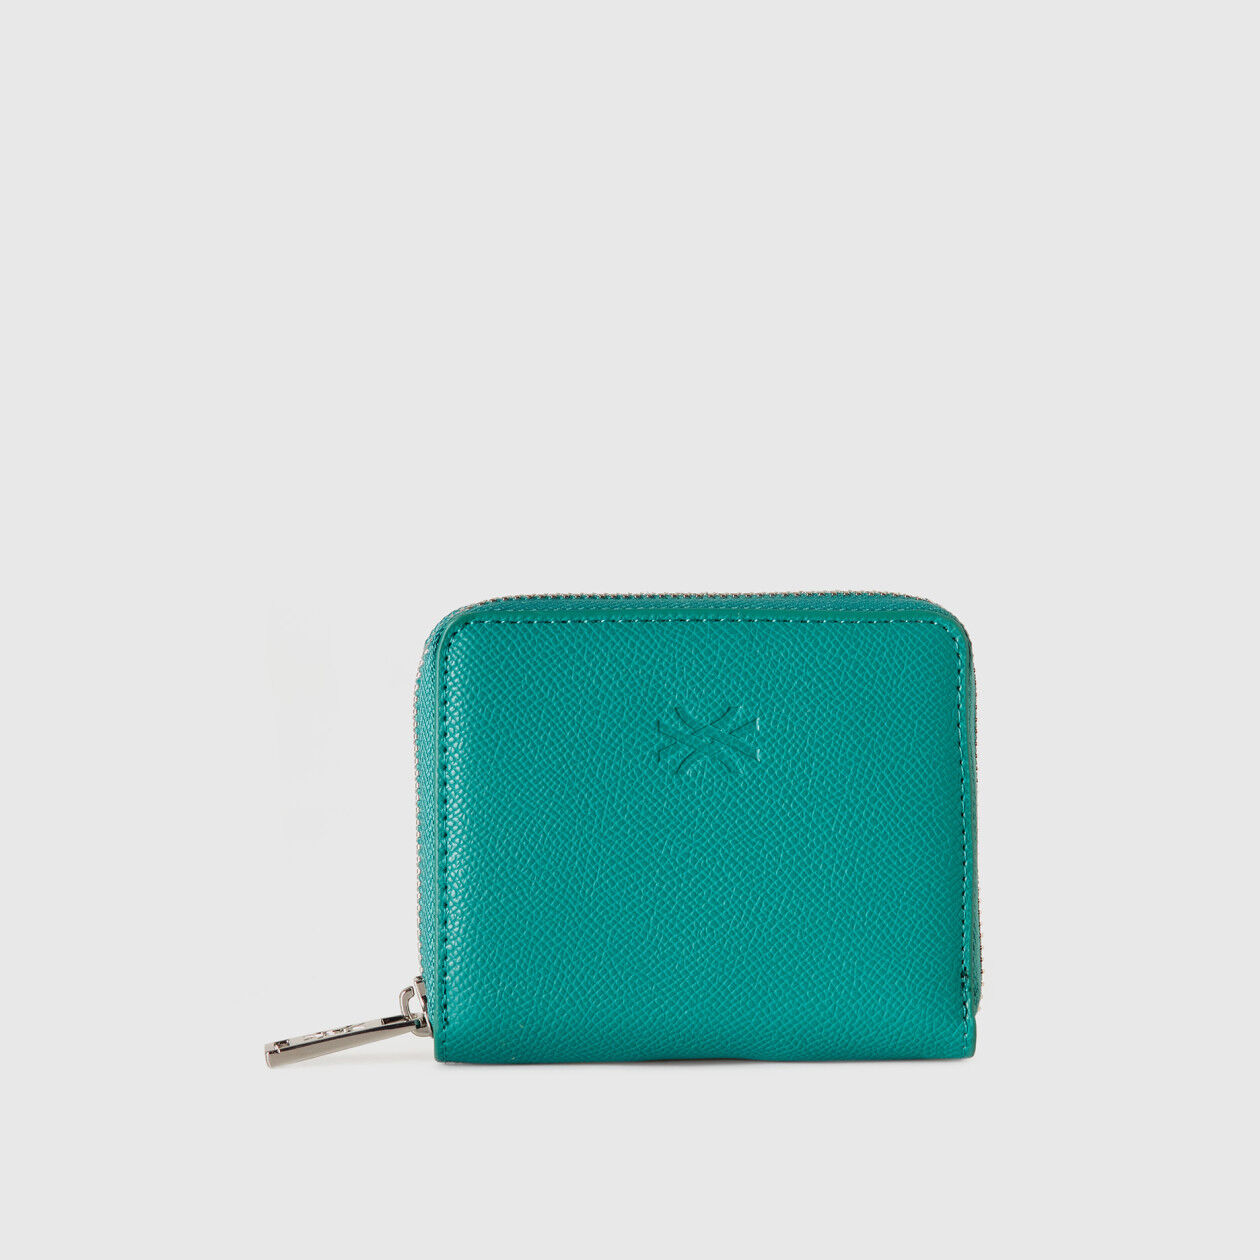 MULBERRY SOMERSET SMALL zipped purse in Oak £145.00 - PicClick UK